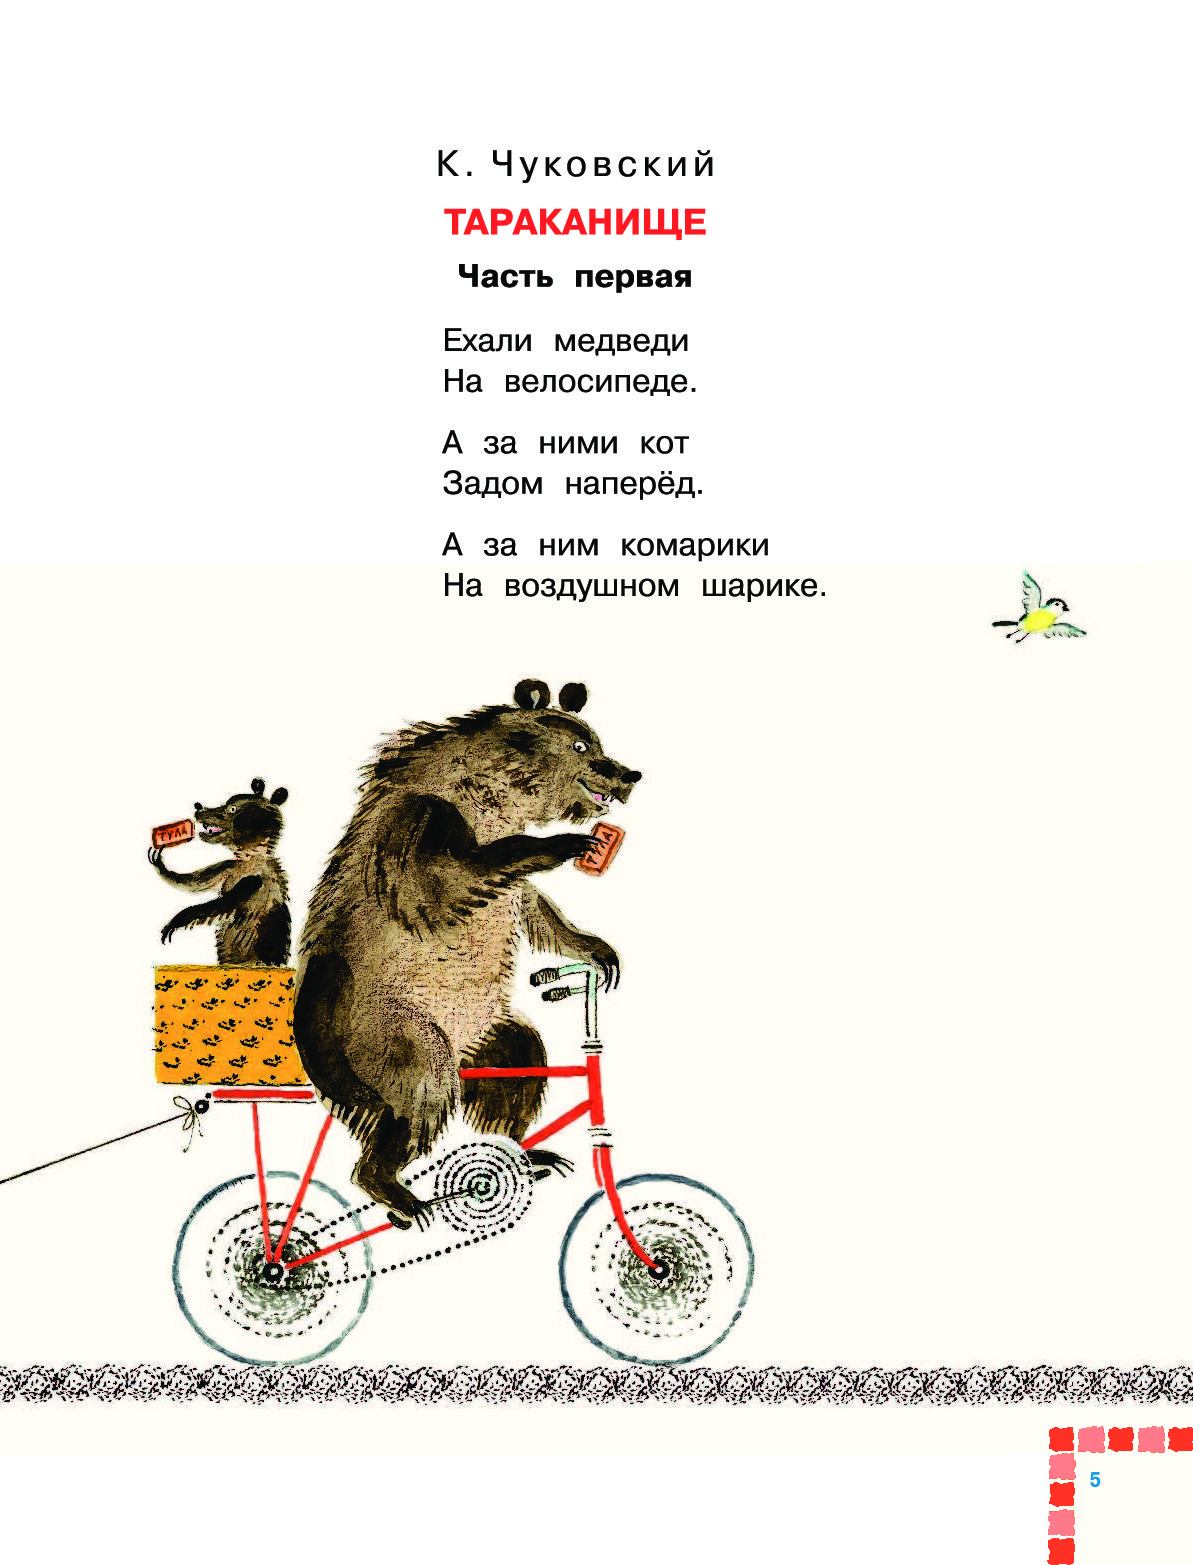 Тараканище ехали медведи на велосипеде. Медведи на велосипеде Чуковский. Стих ехали медведи. Стих Чуковского ехали медведи на велосипеде. Медведи на велосипеде стих.